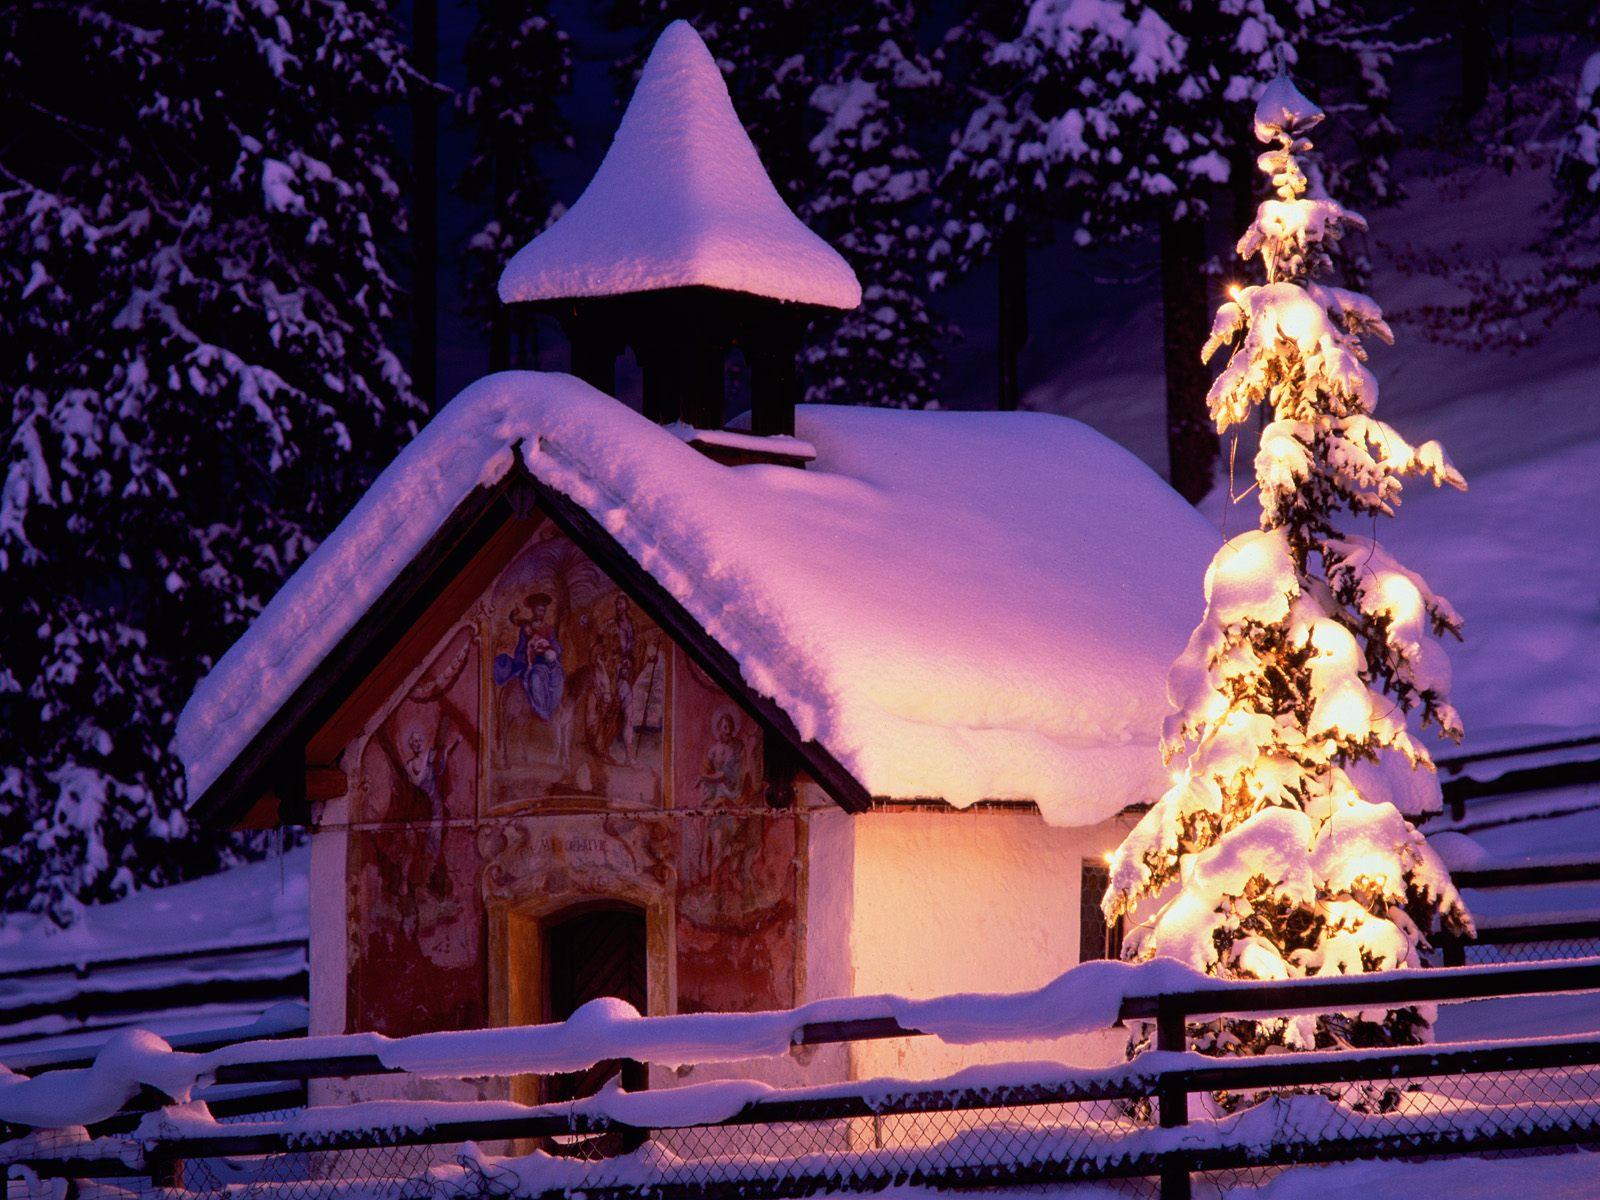 Snowy Church Scenes At Christmas